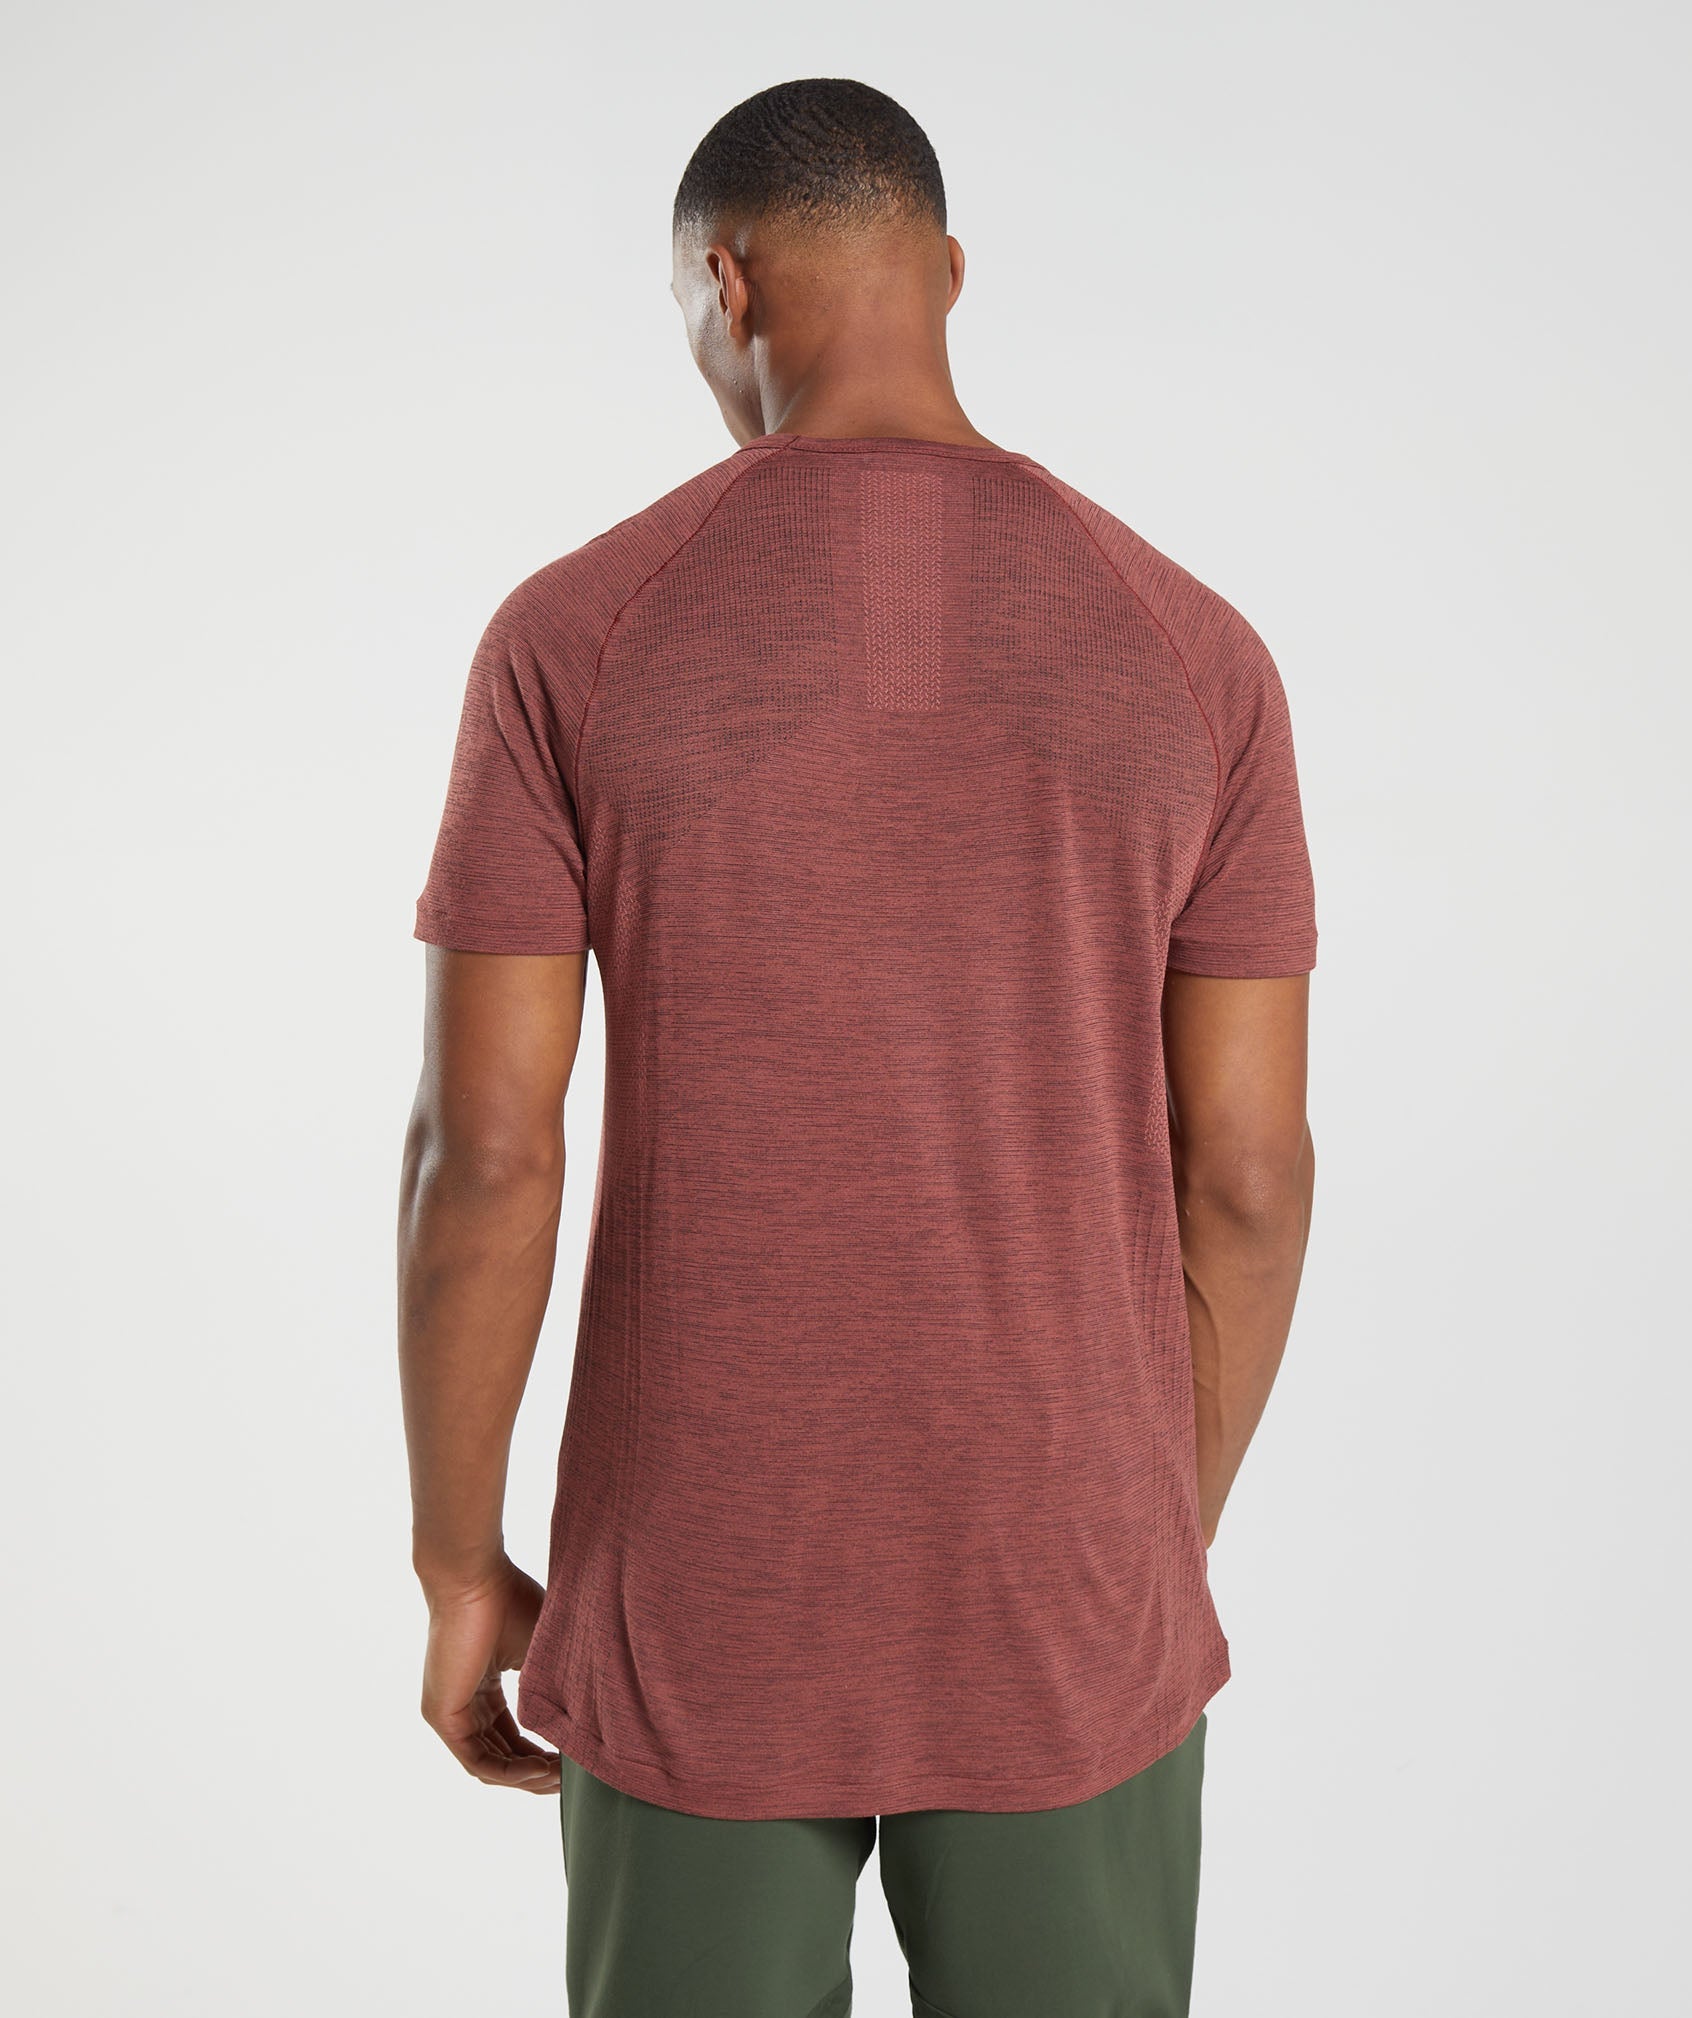 Retake Seamless T-Shirt in Rose Brown/Black Marl - view 2